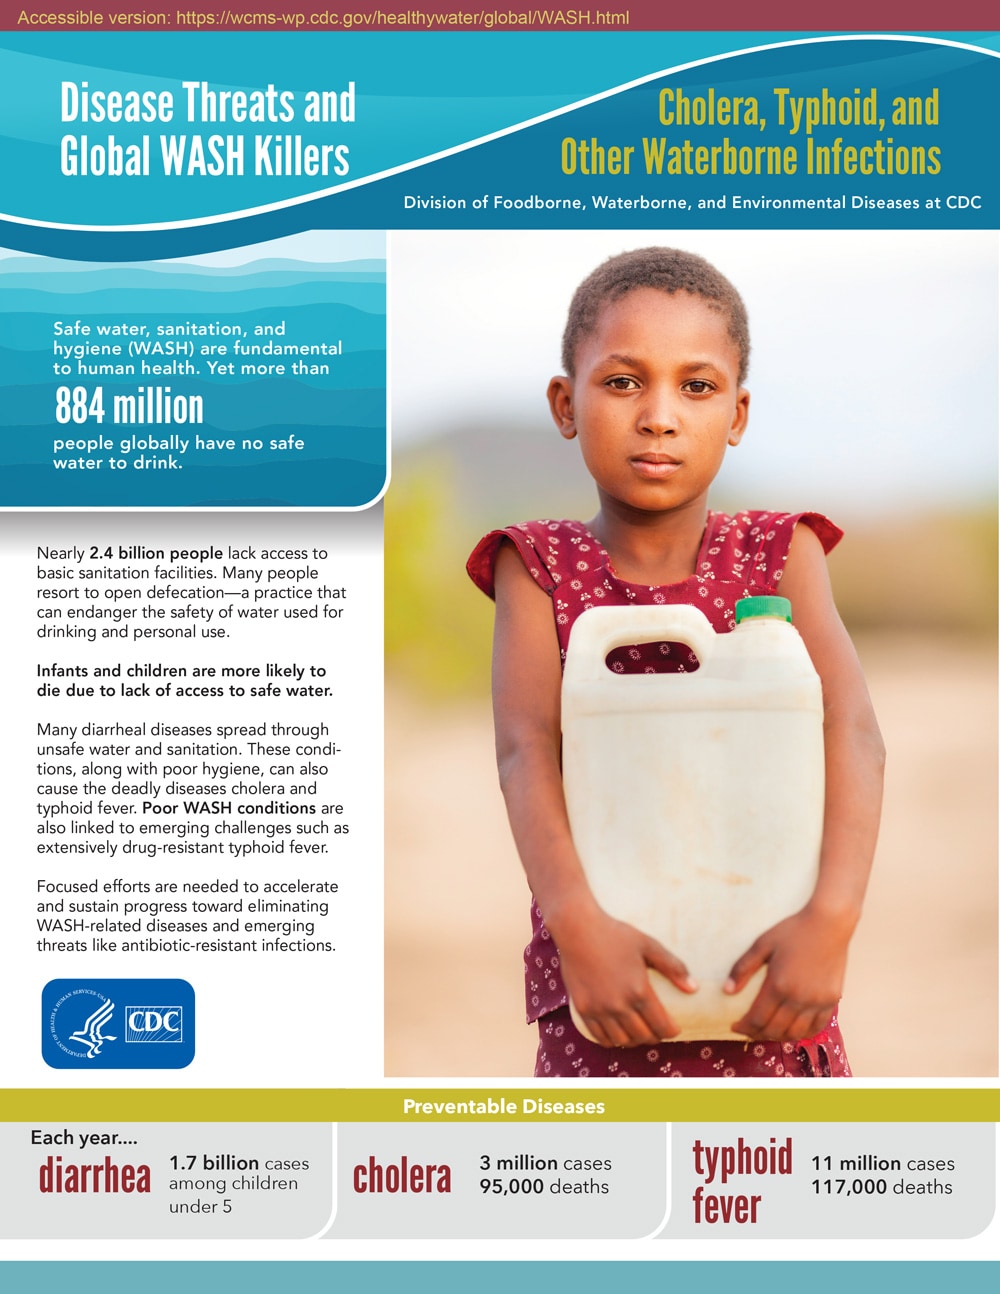 Disease Threats and Global WASH Killers